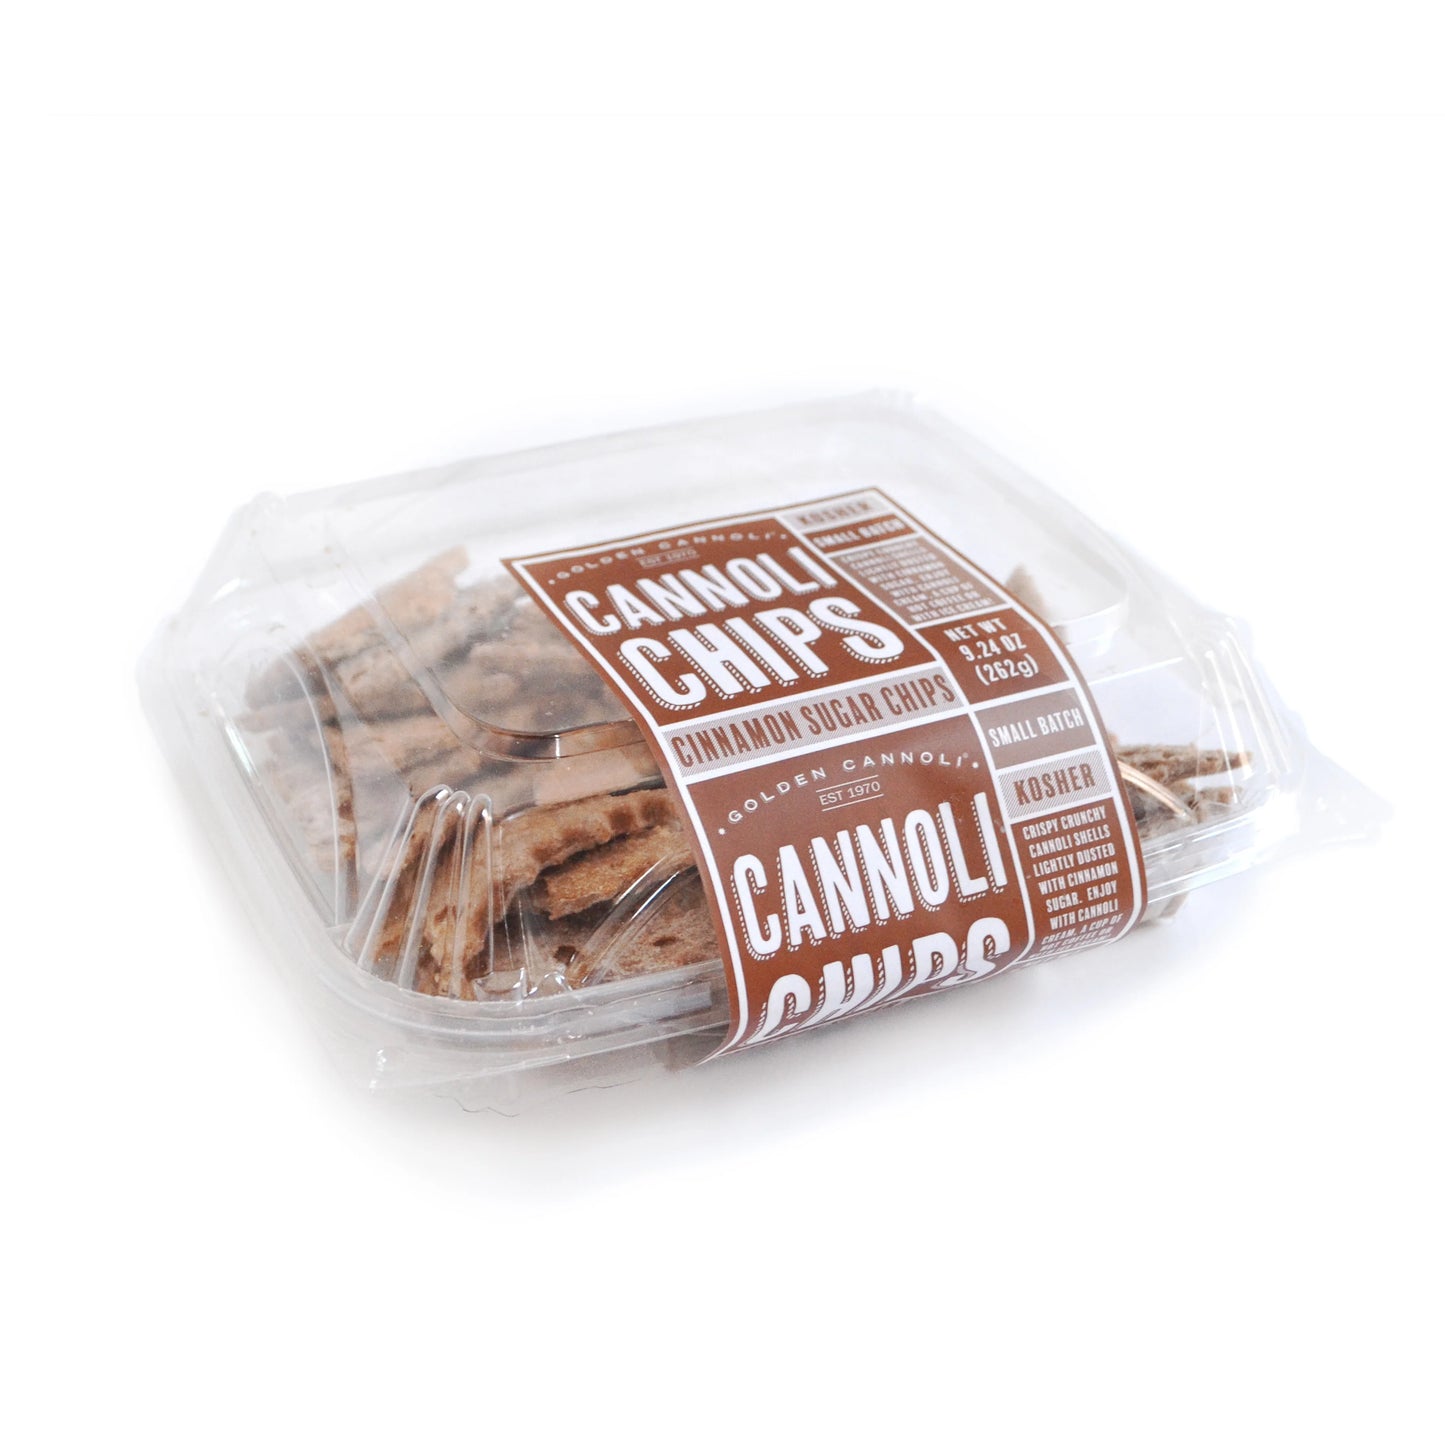 Cannoli Chips - Golden Cannoli - Cinnamon Sugar